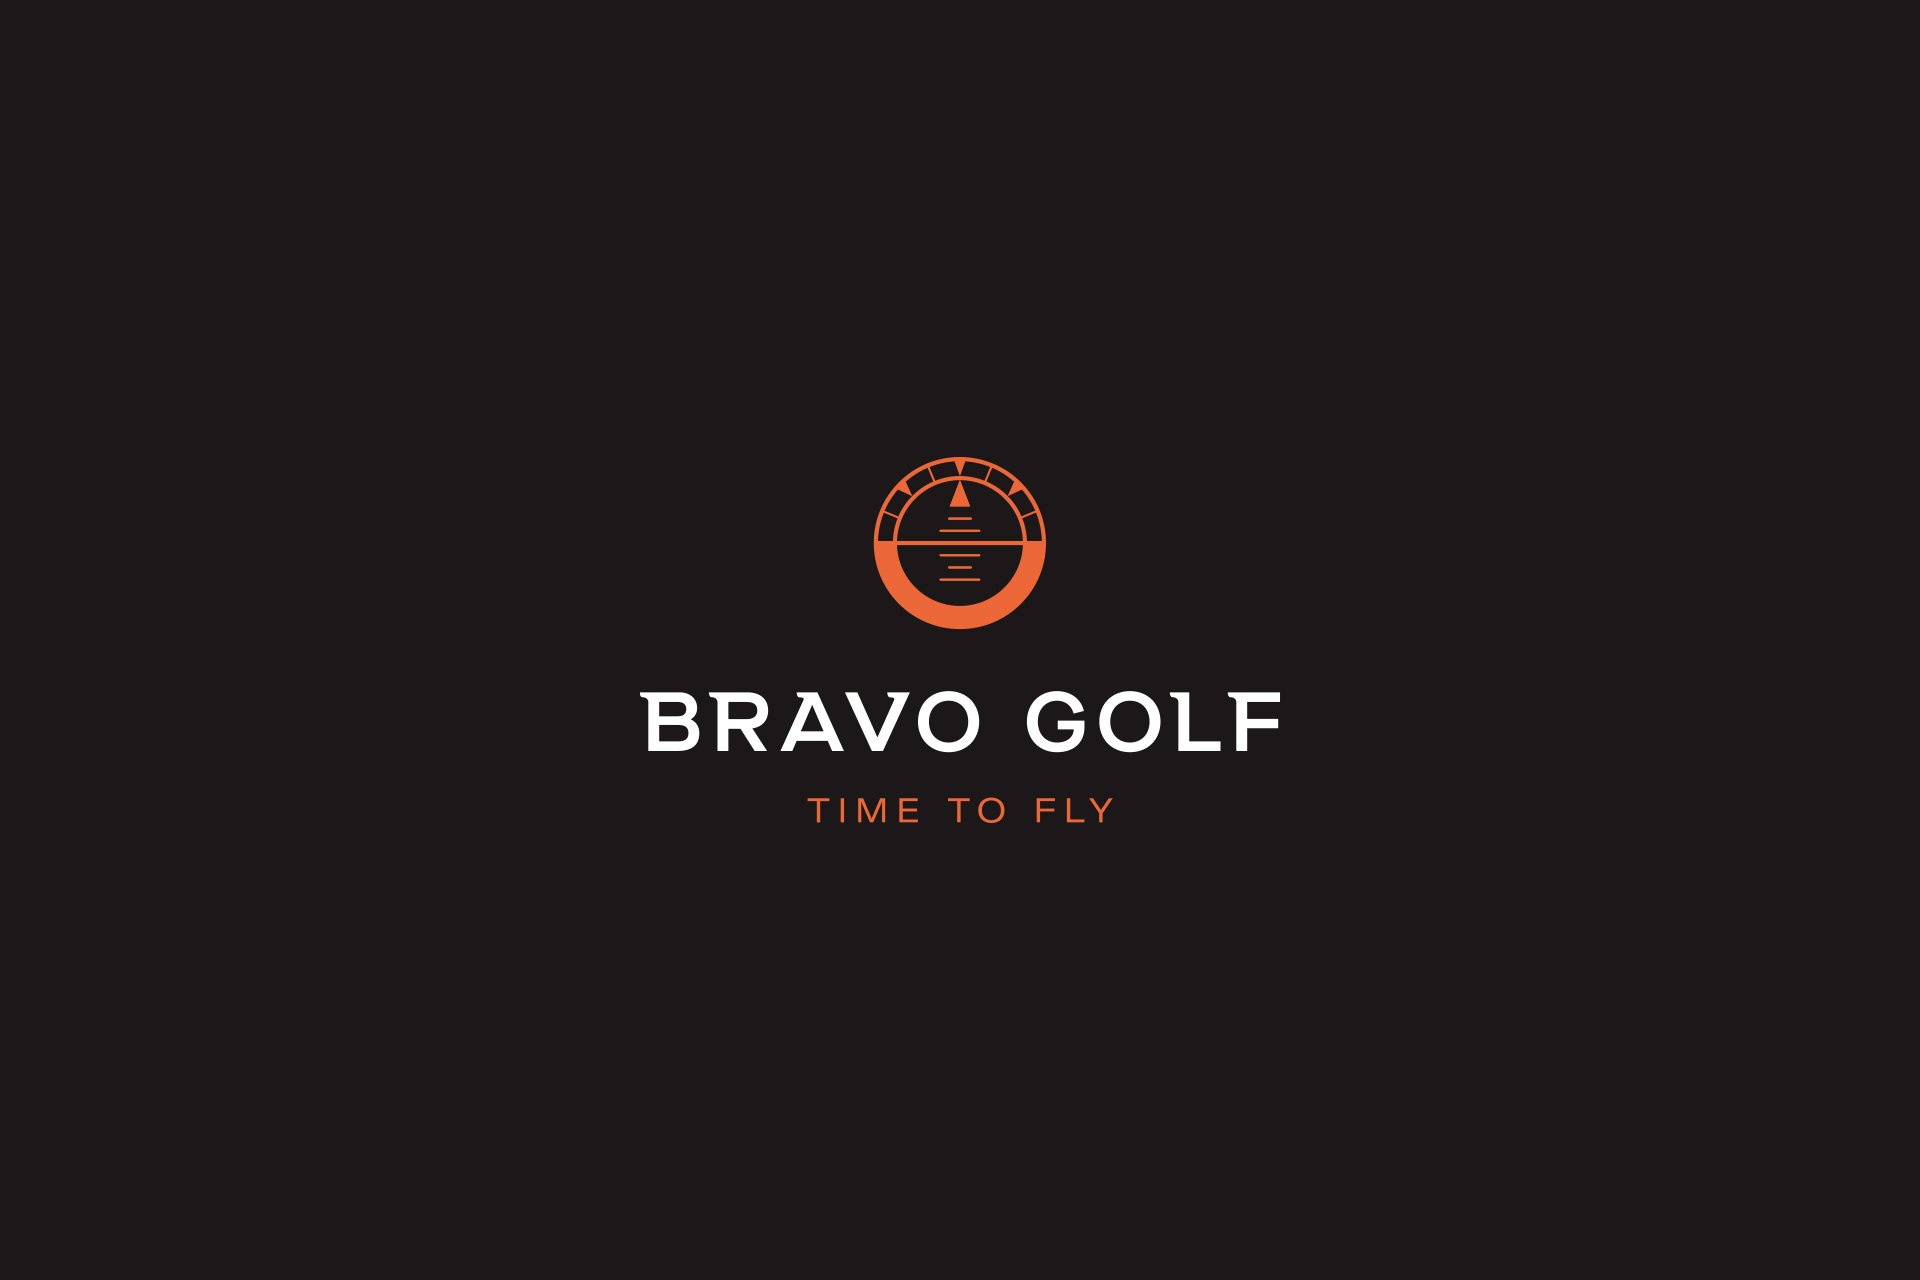 Bravo Golf Pilot Watch Branding — Russell Shaw Design